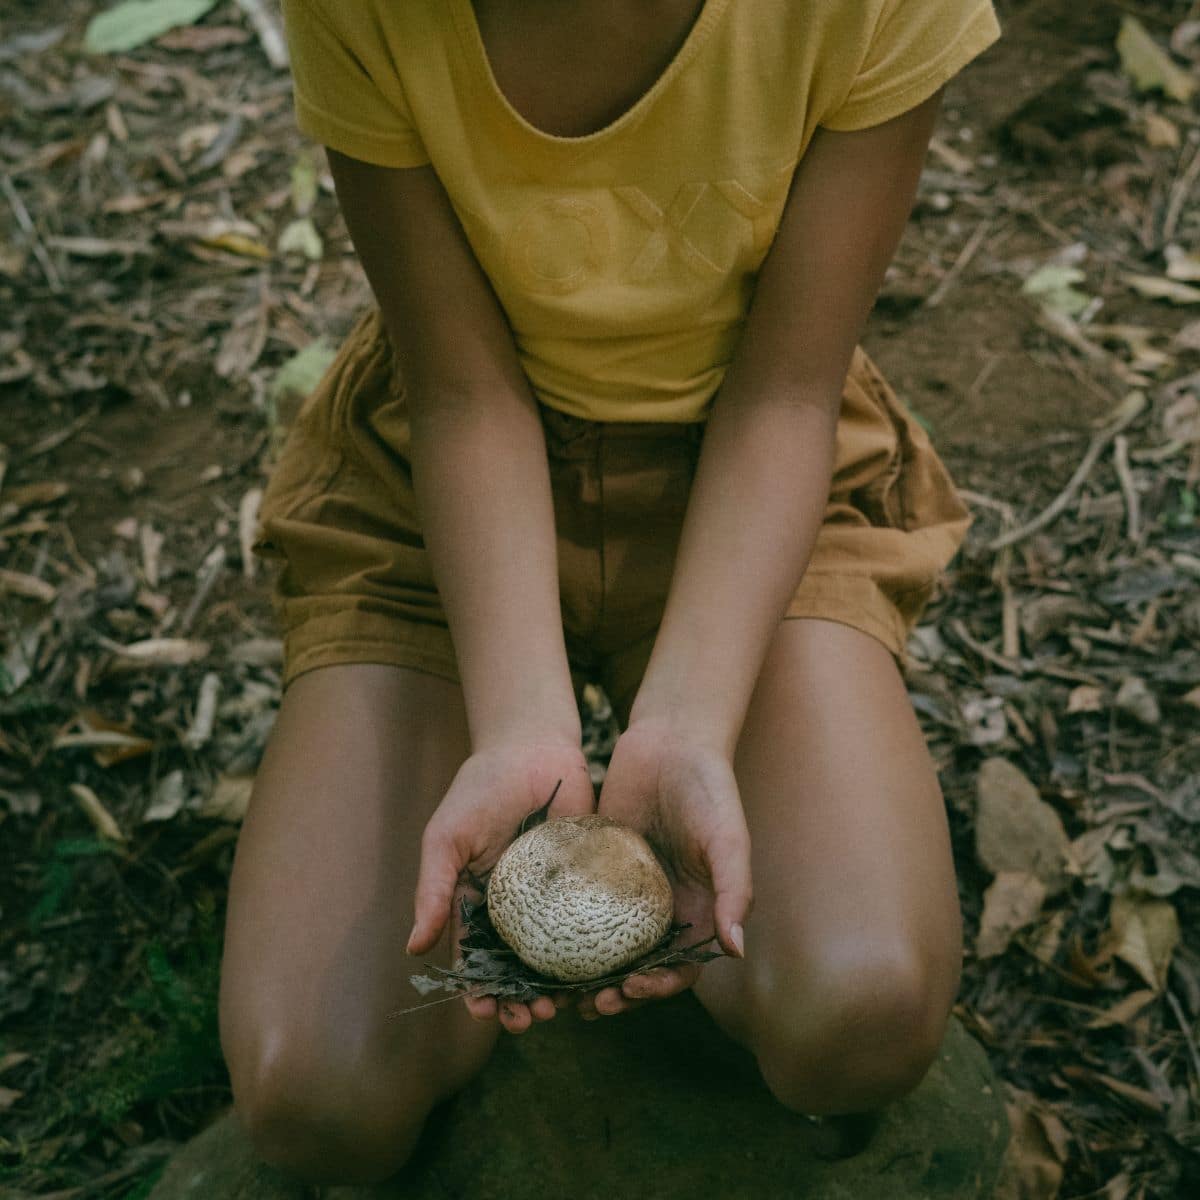 girl holding mushroom mushroom hunting with kids